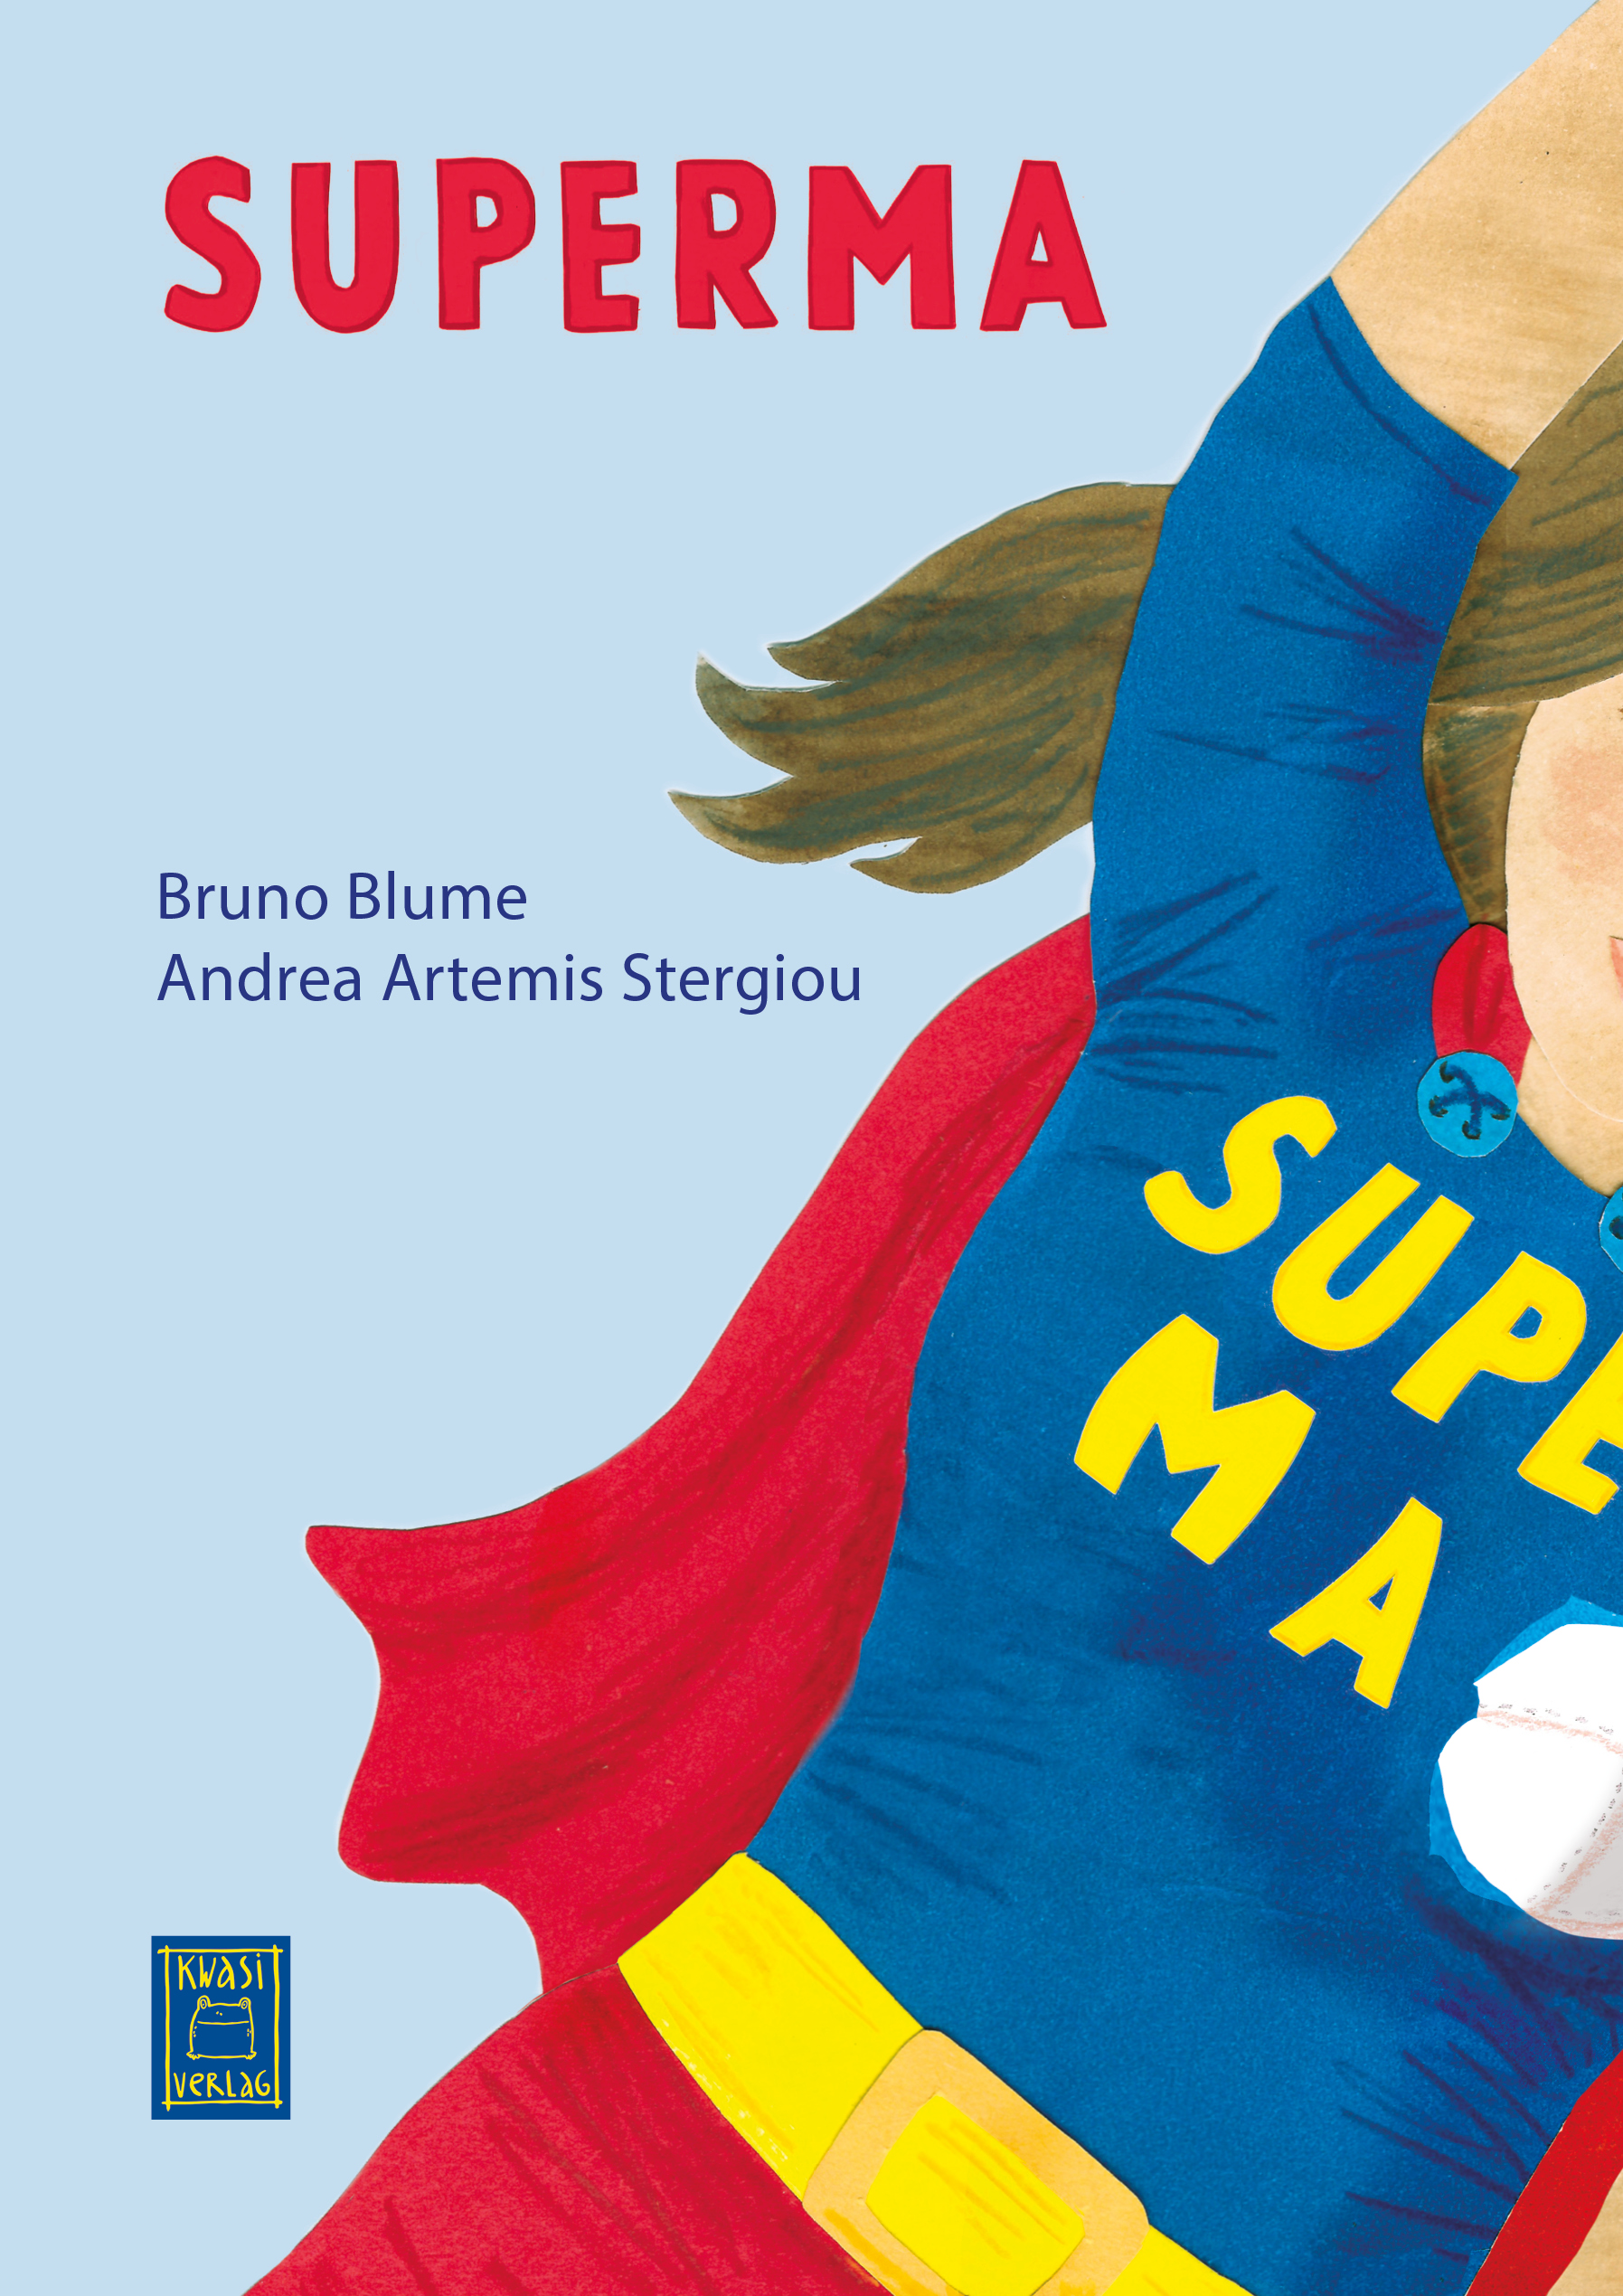 Buchcover "Superma"